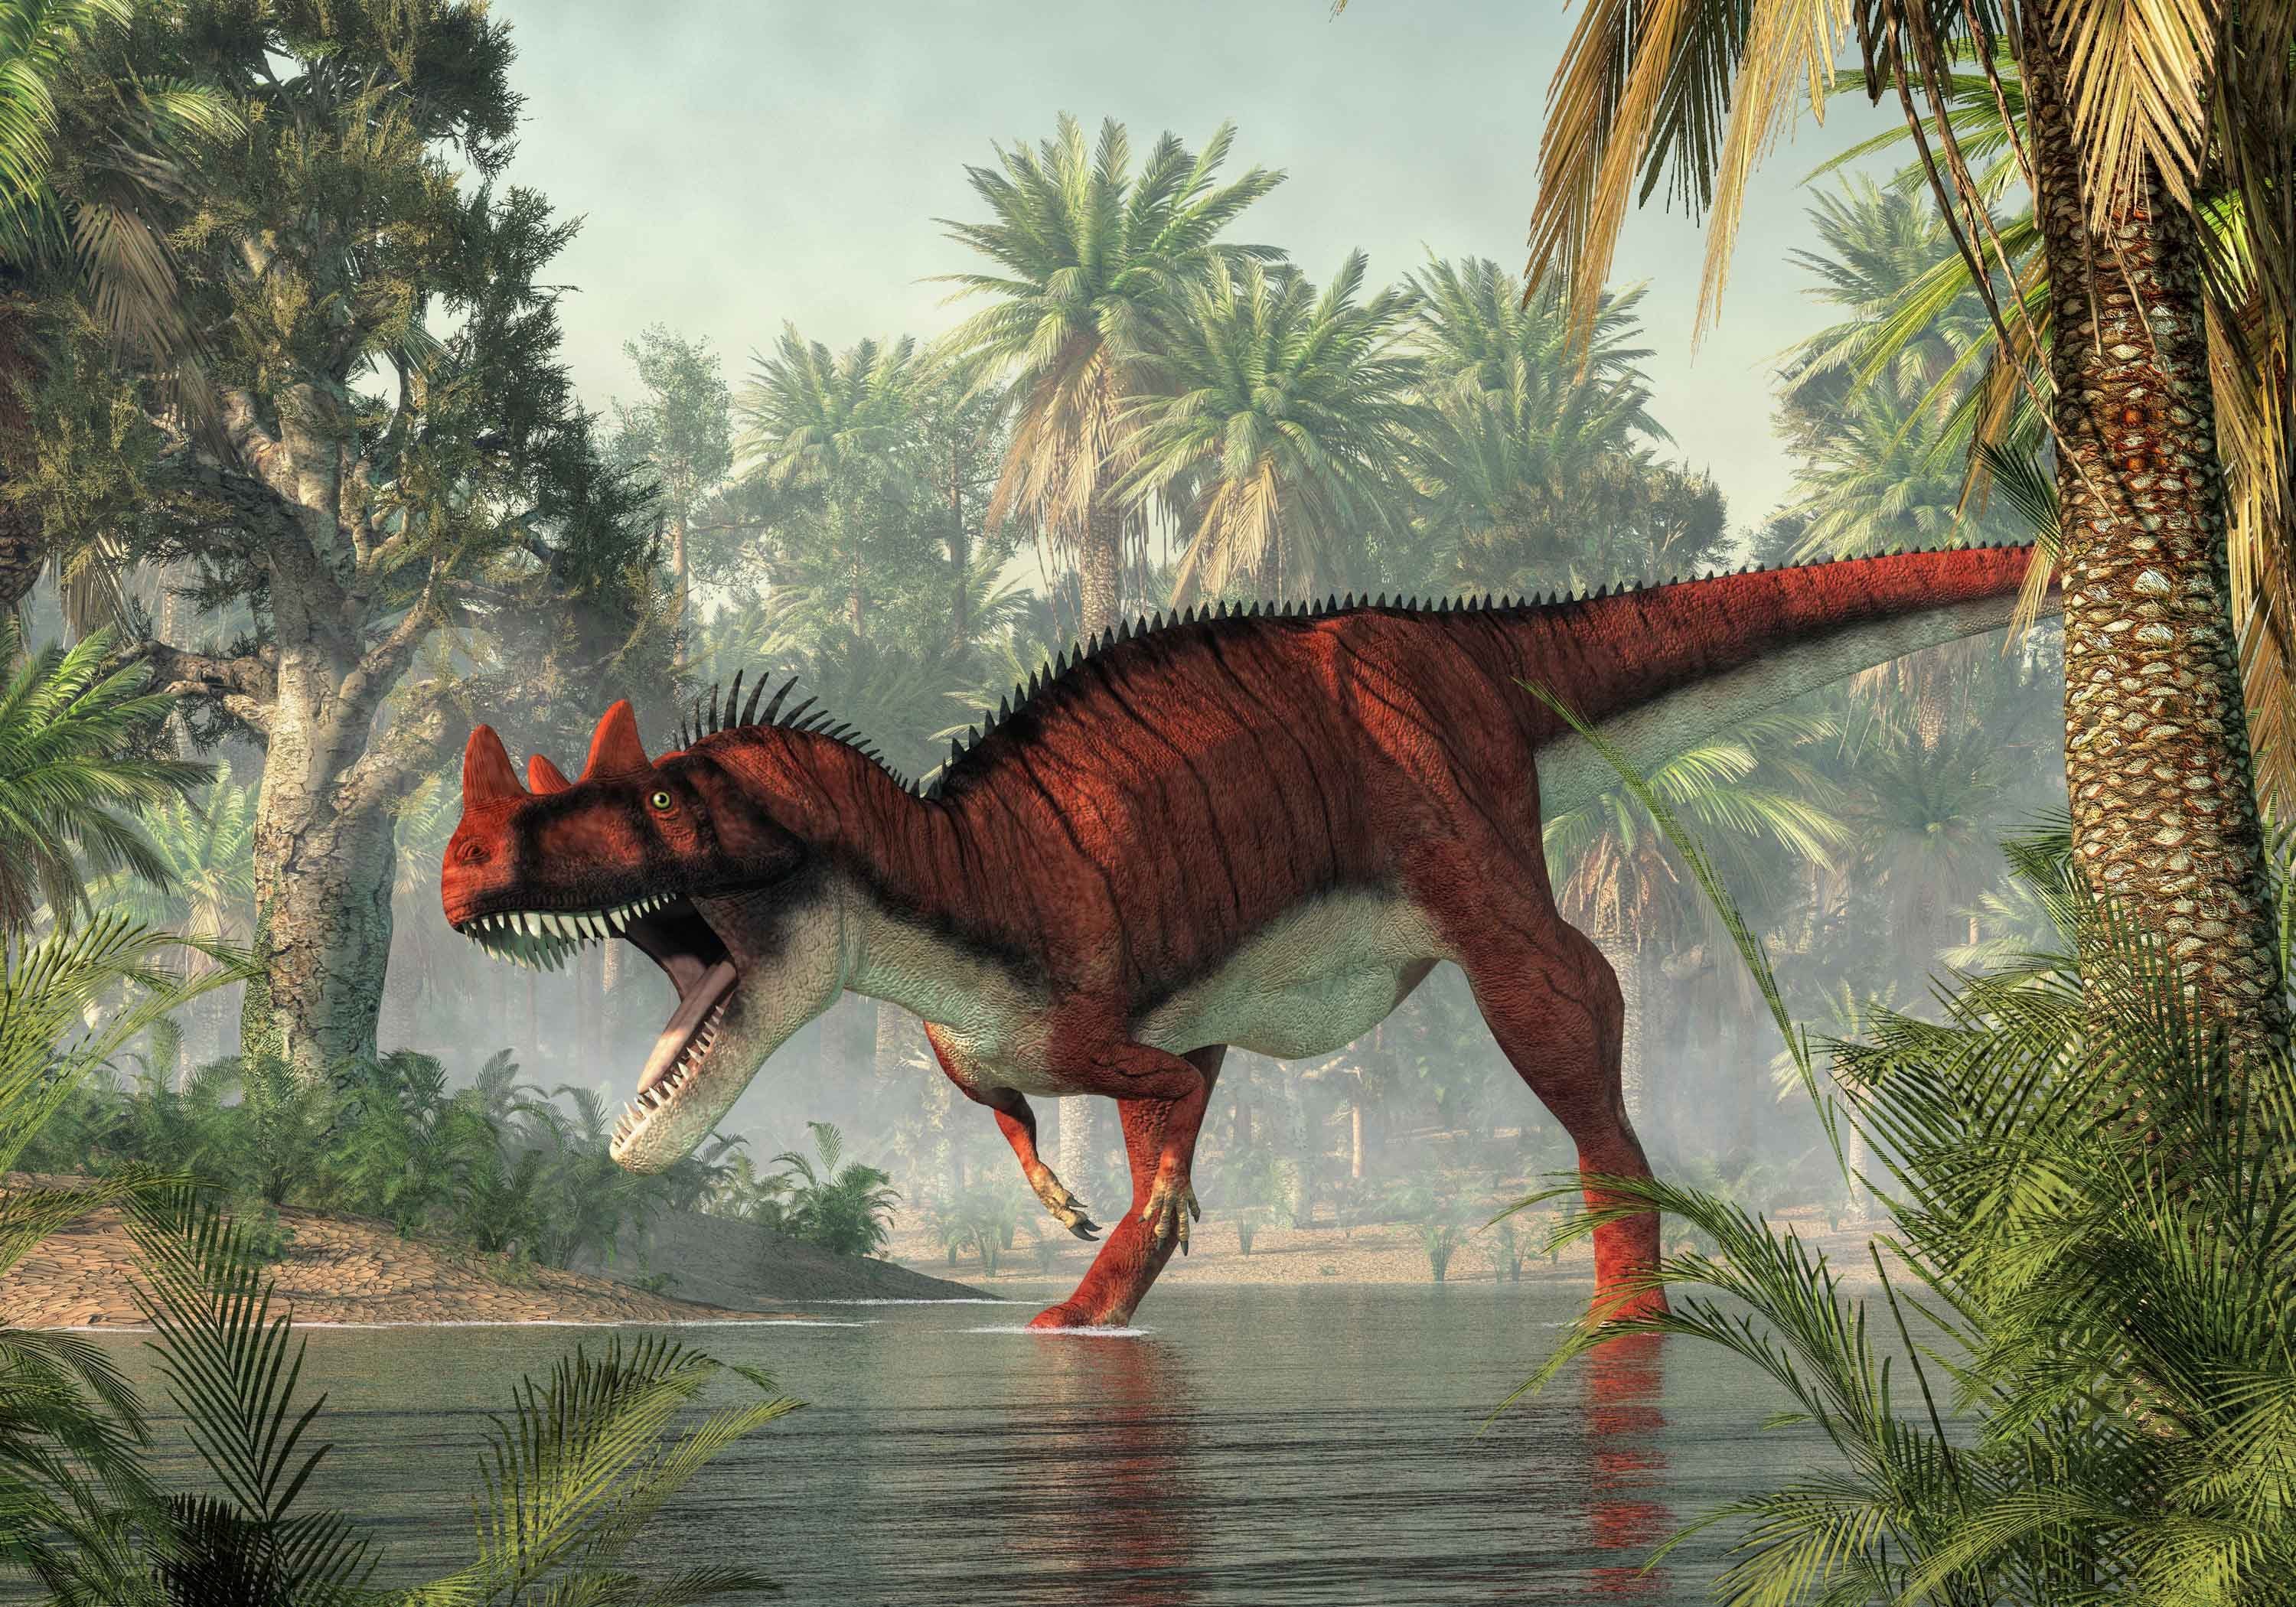 wandmotiv24 Fototapete Ceratosaurus im Wasser mit Palmen, glatt, Wandtapete, Motivtapete, matt, Vliestapete